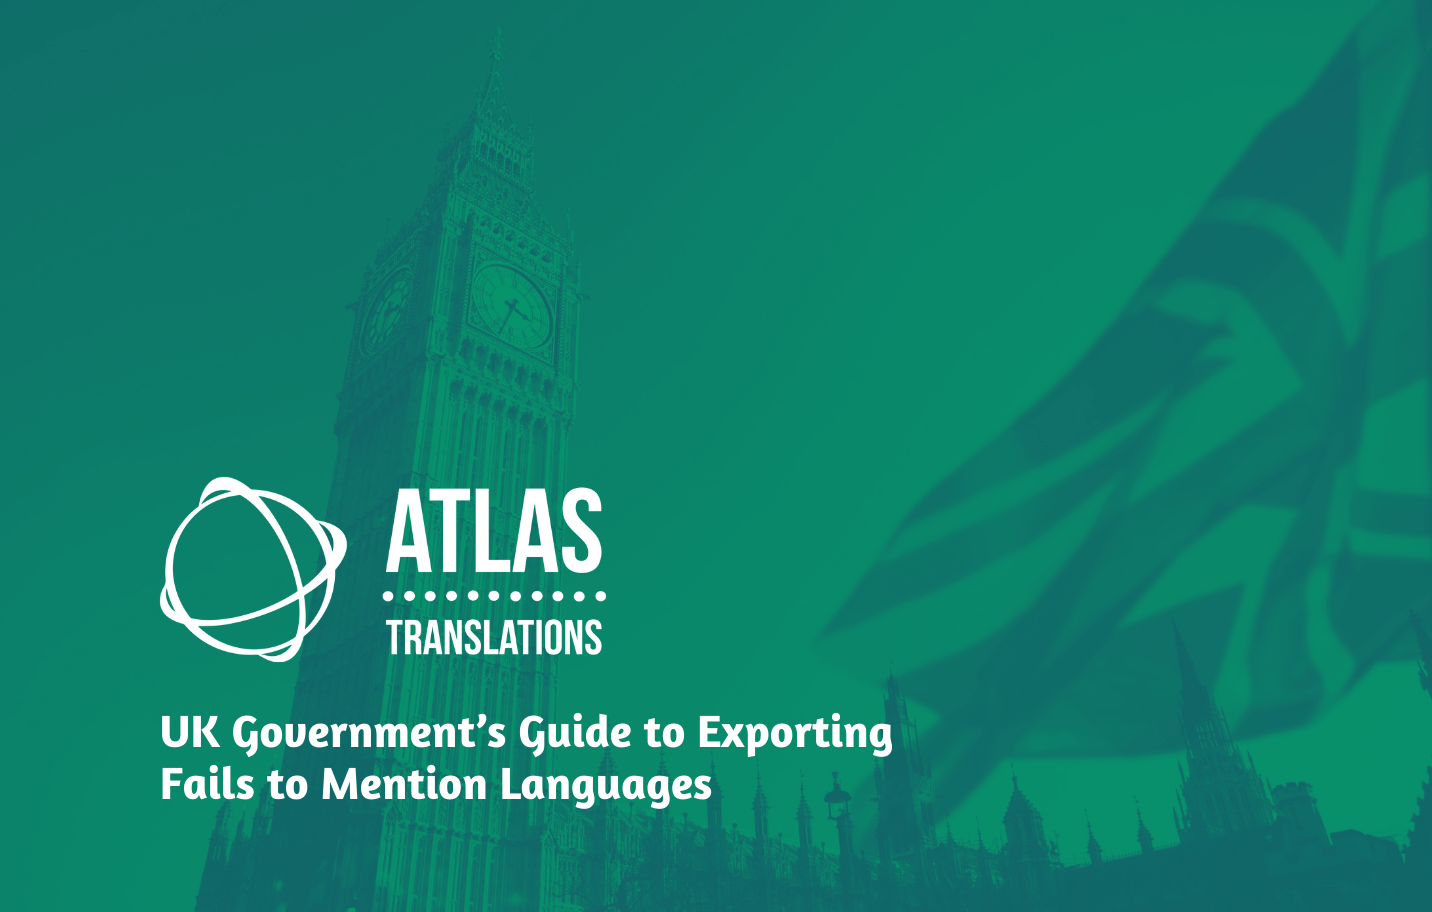 Guide to Exporting Blog_Atlas Translations_Translation Agency_Translation Services_Certified Translation Services_Document Translation Services